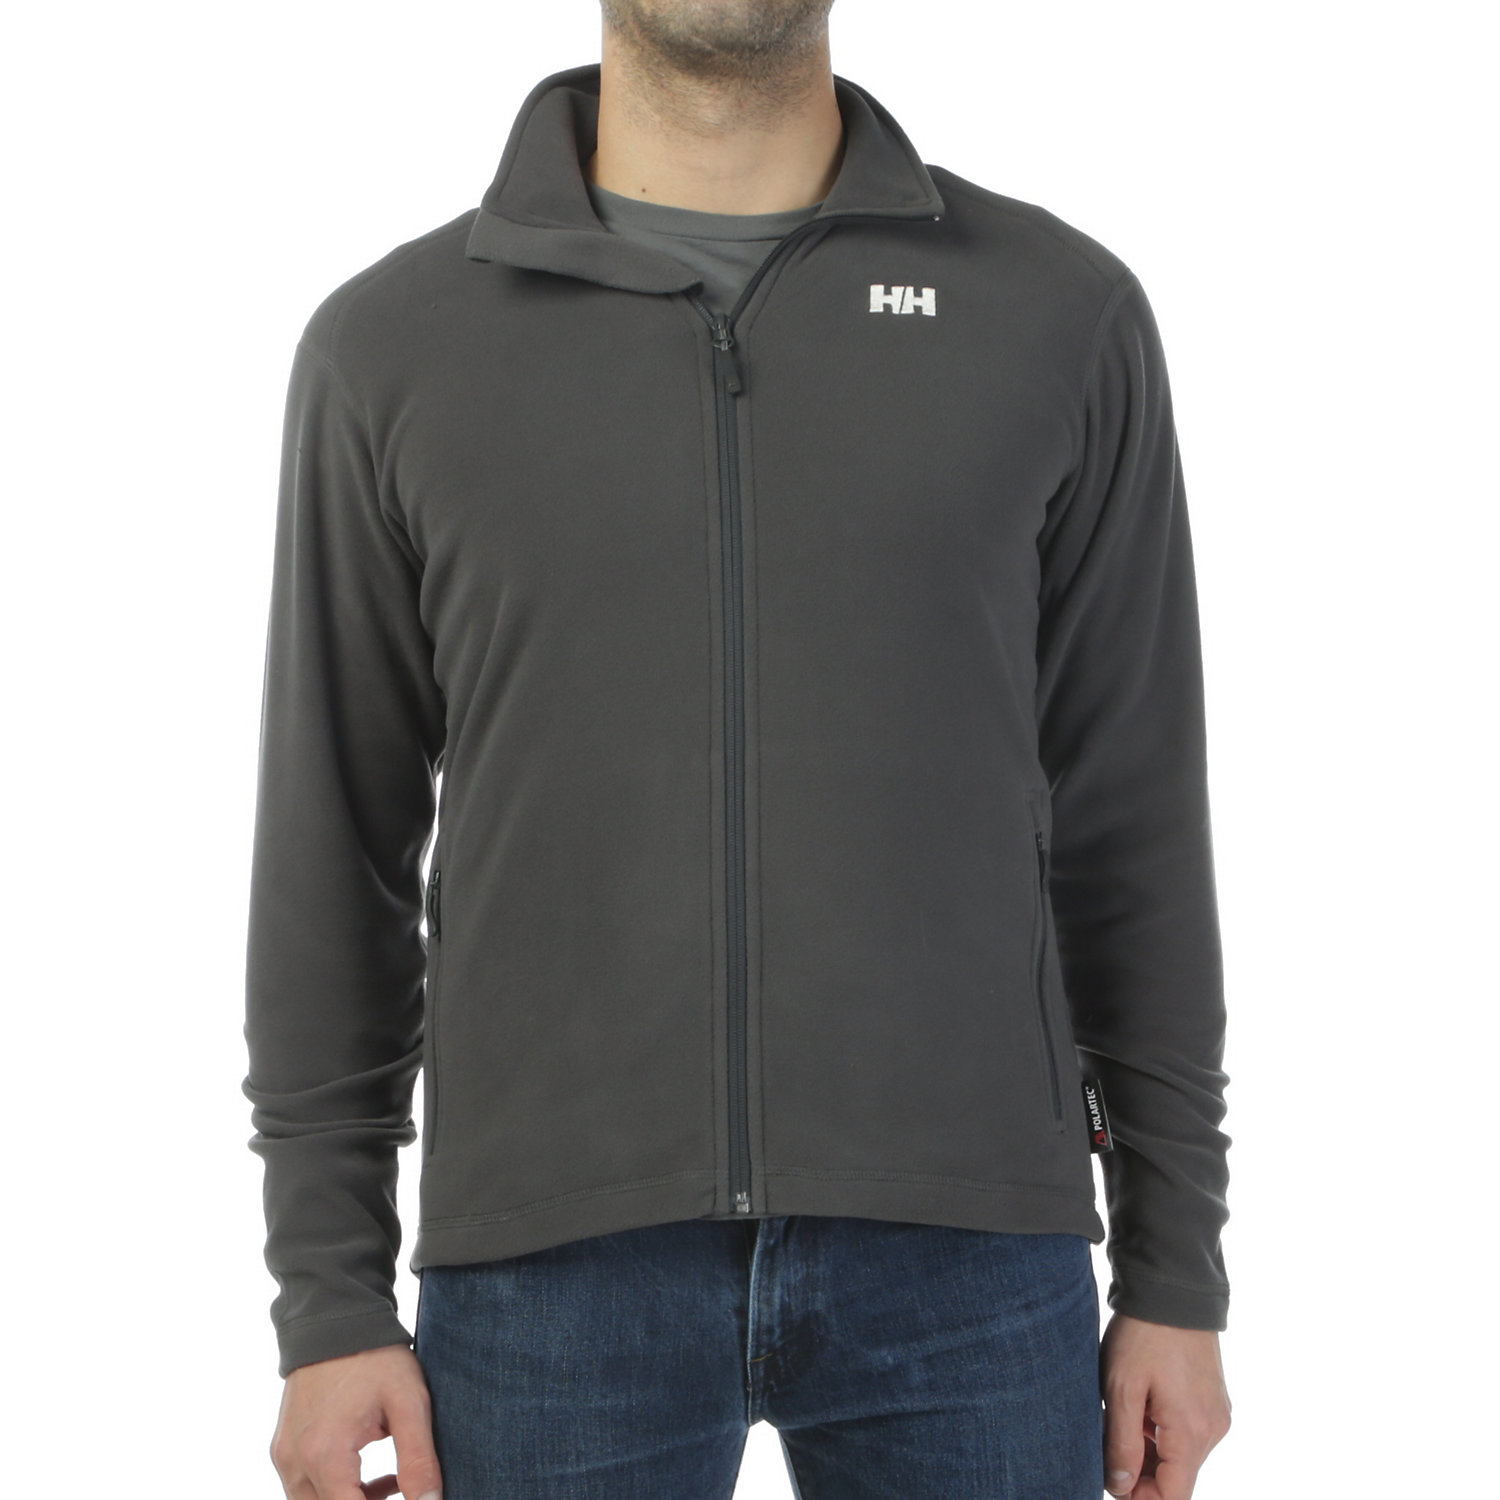 Helly Hansen Daybreaker Full Zip Fleece Jacket for Men with Polartec Technology